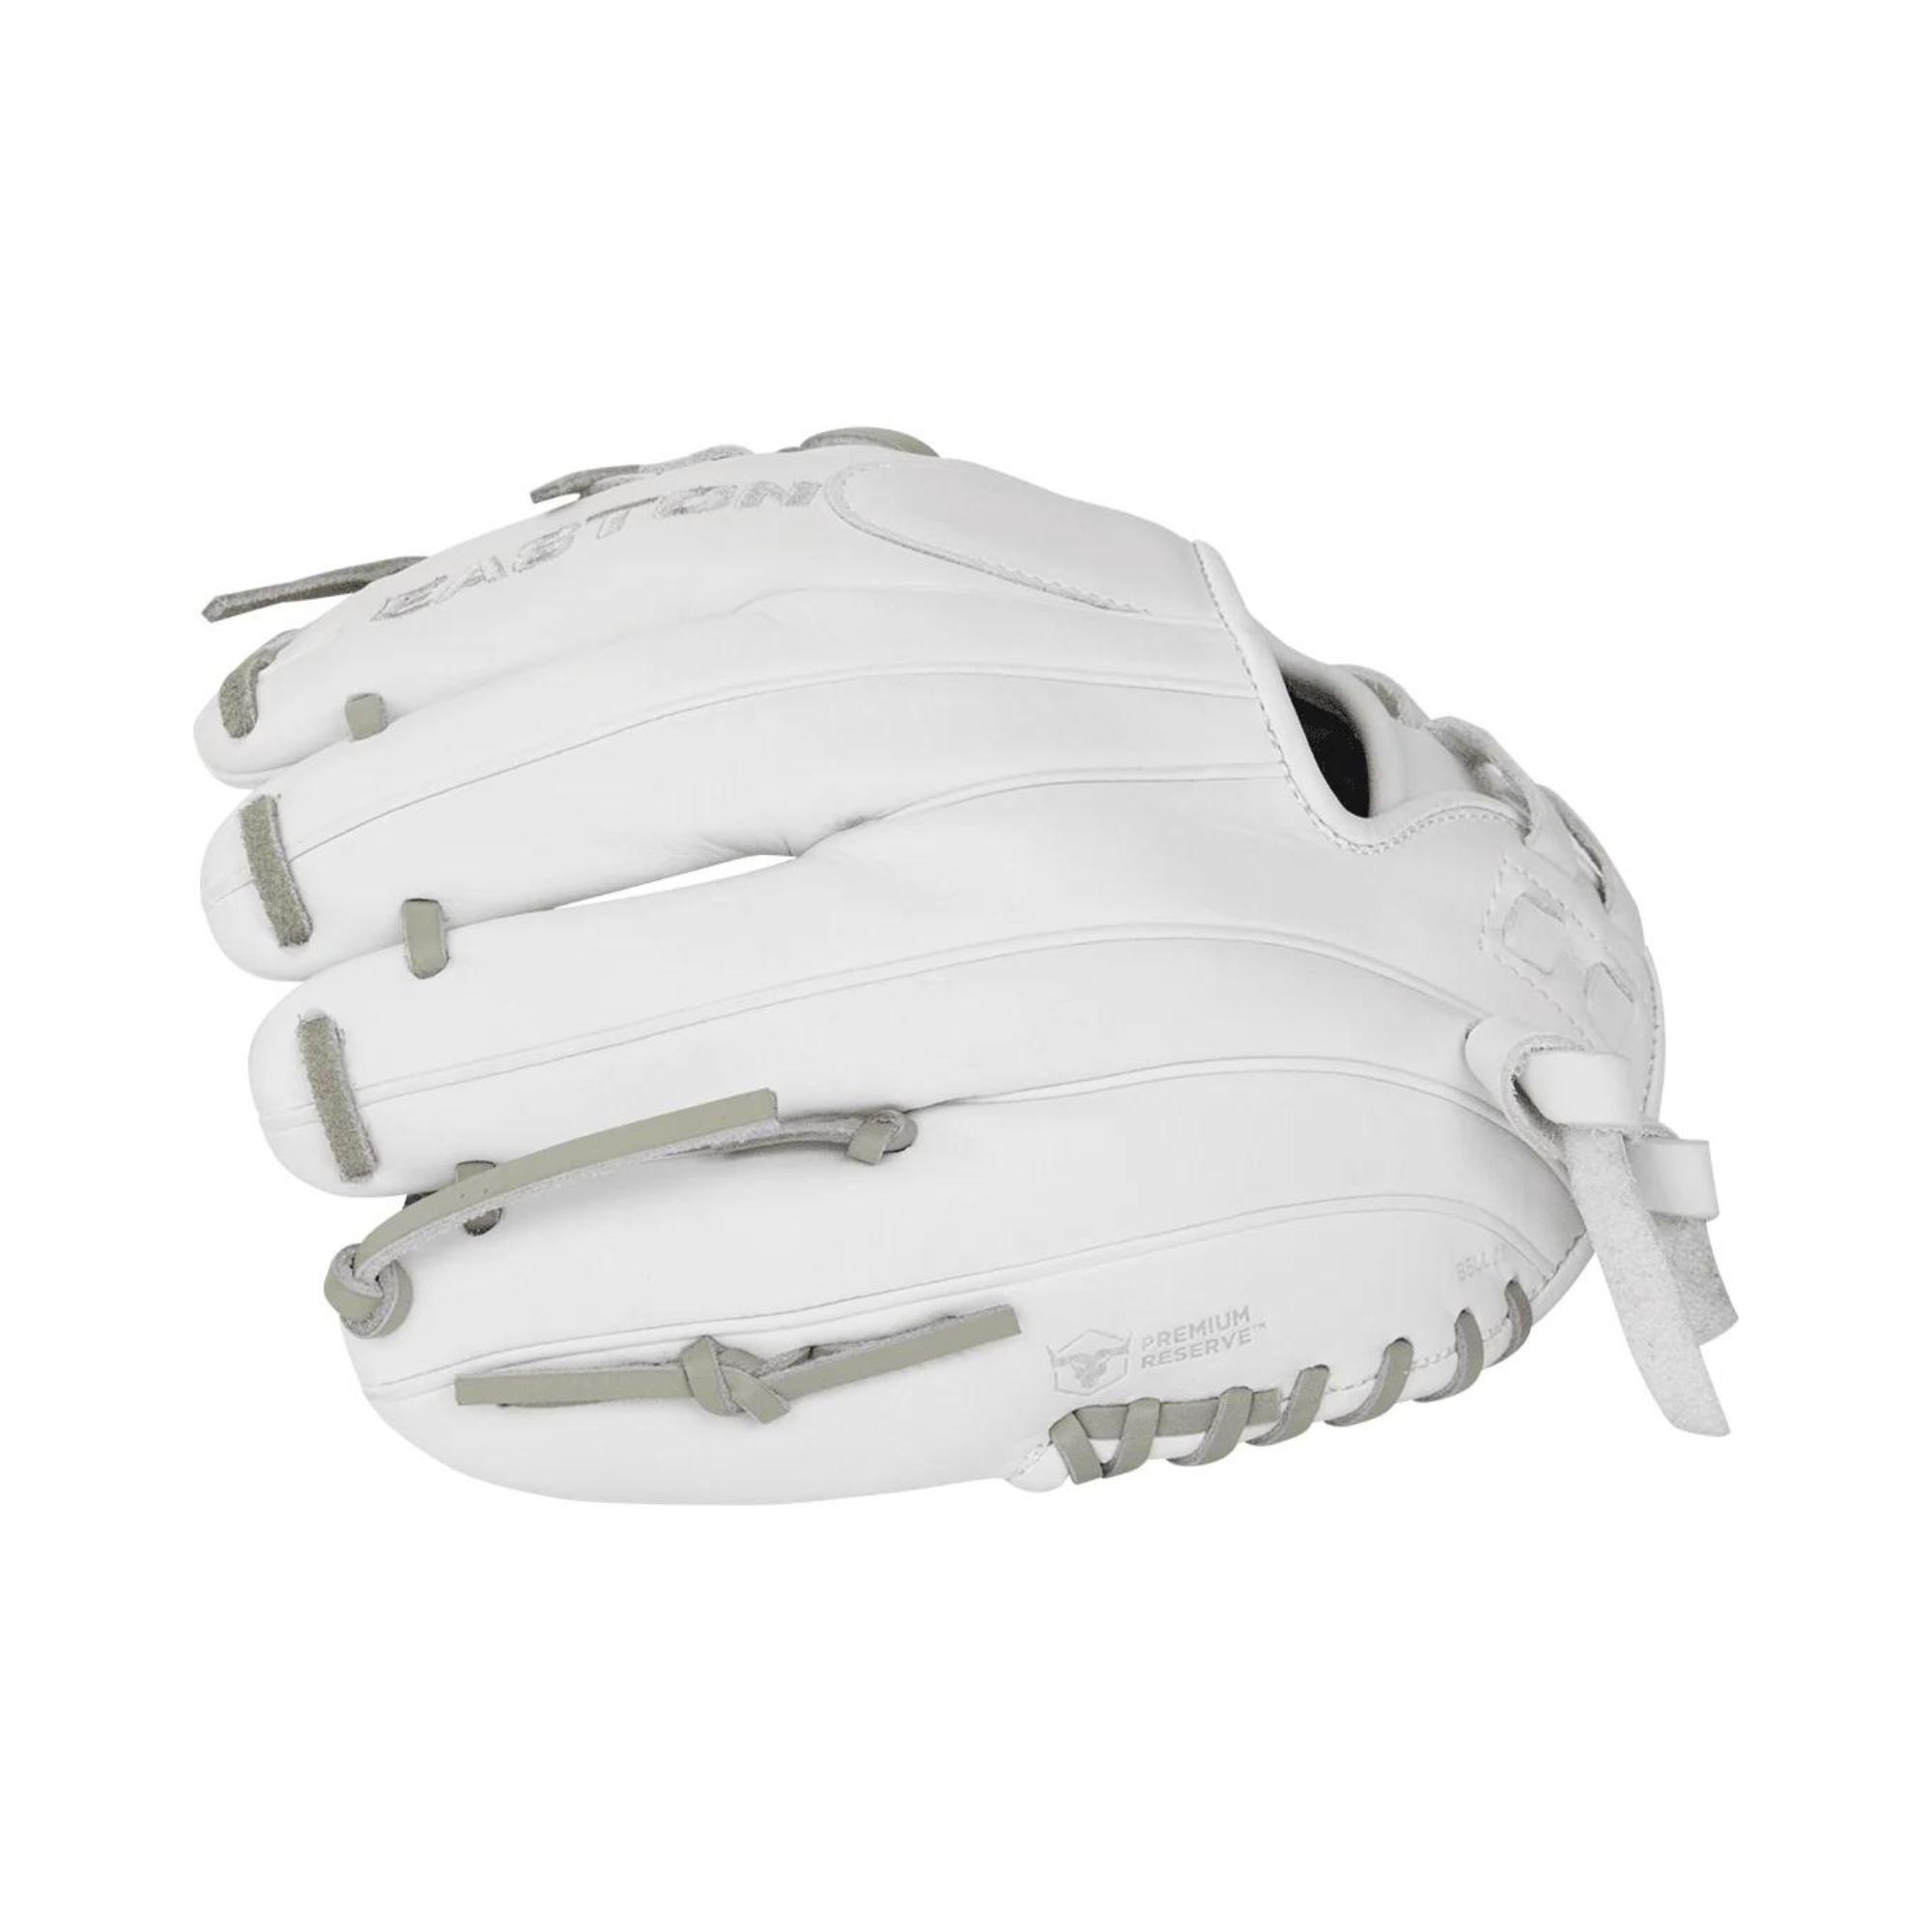 Easton Pro Collection Series Softball Glove 11.5" RHT